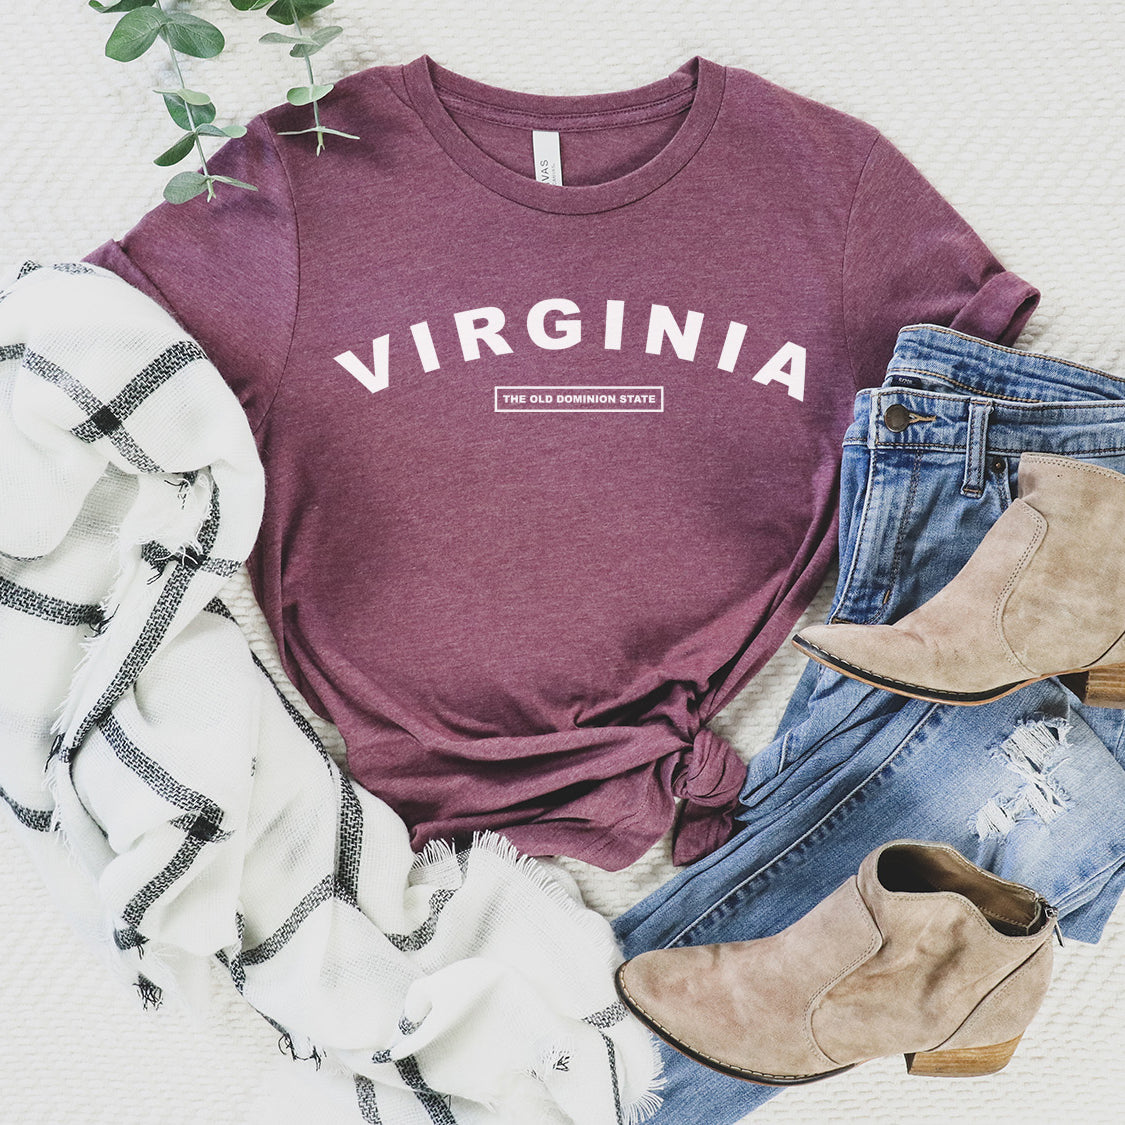 Virginia The Old Dominion State T-shirt - United States Name & Slogan Minimal Design Printed Tee Shirt